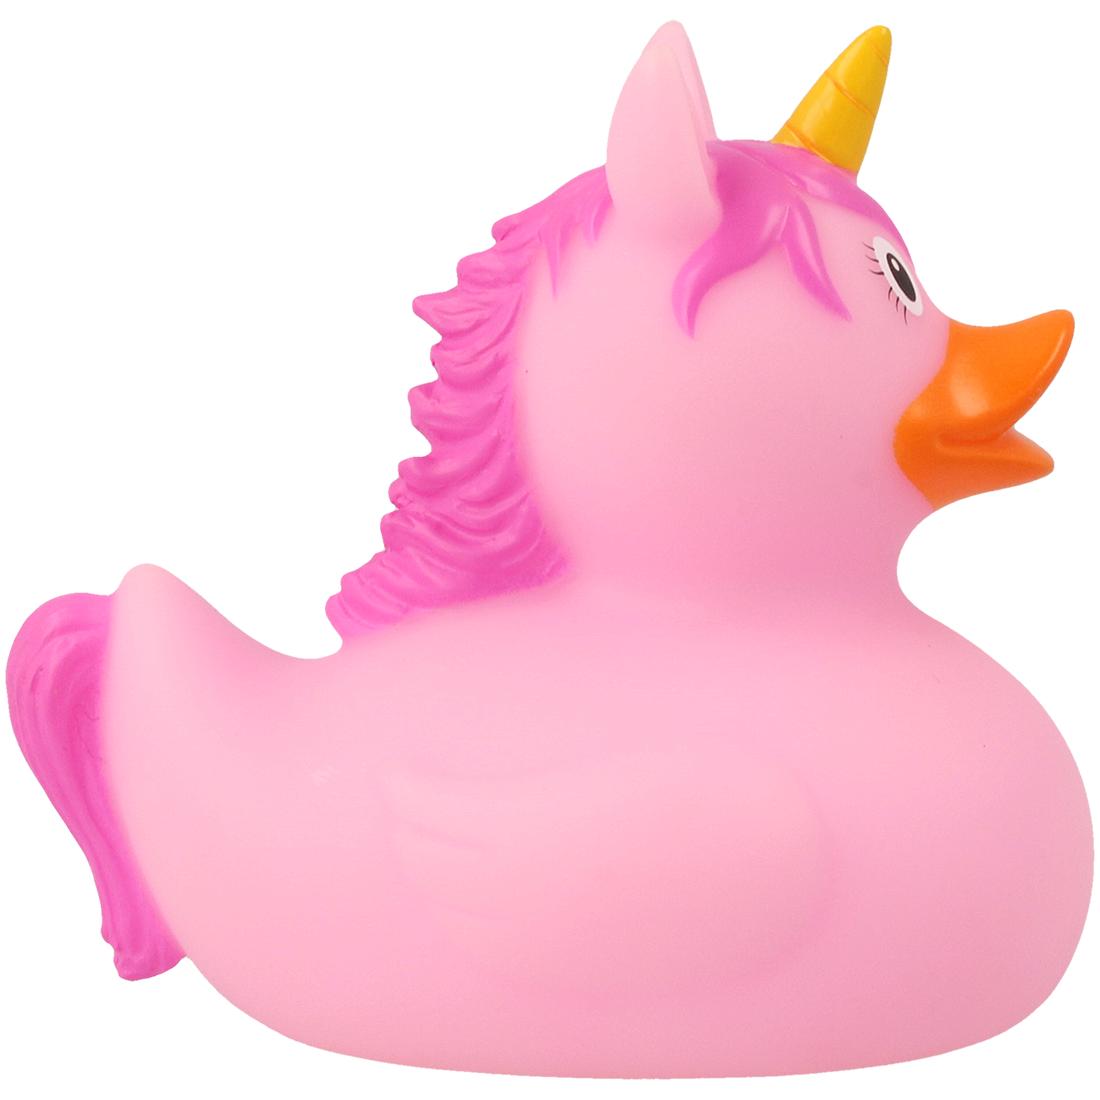 Pink Unicorn Duck.